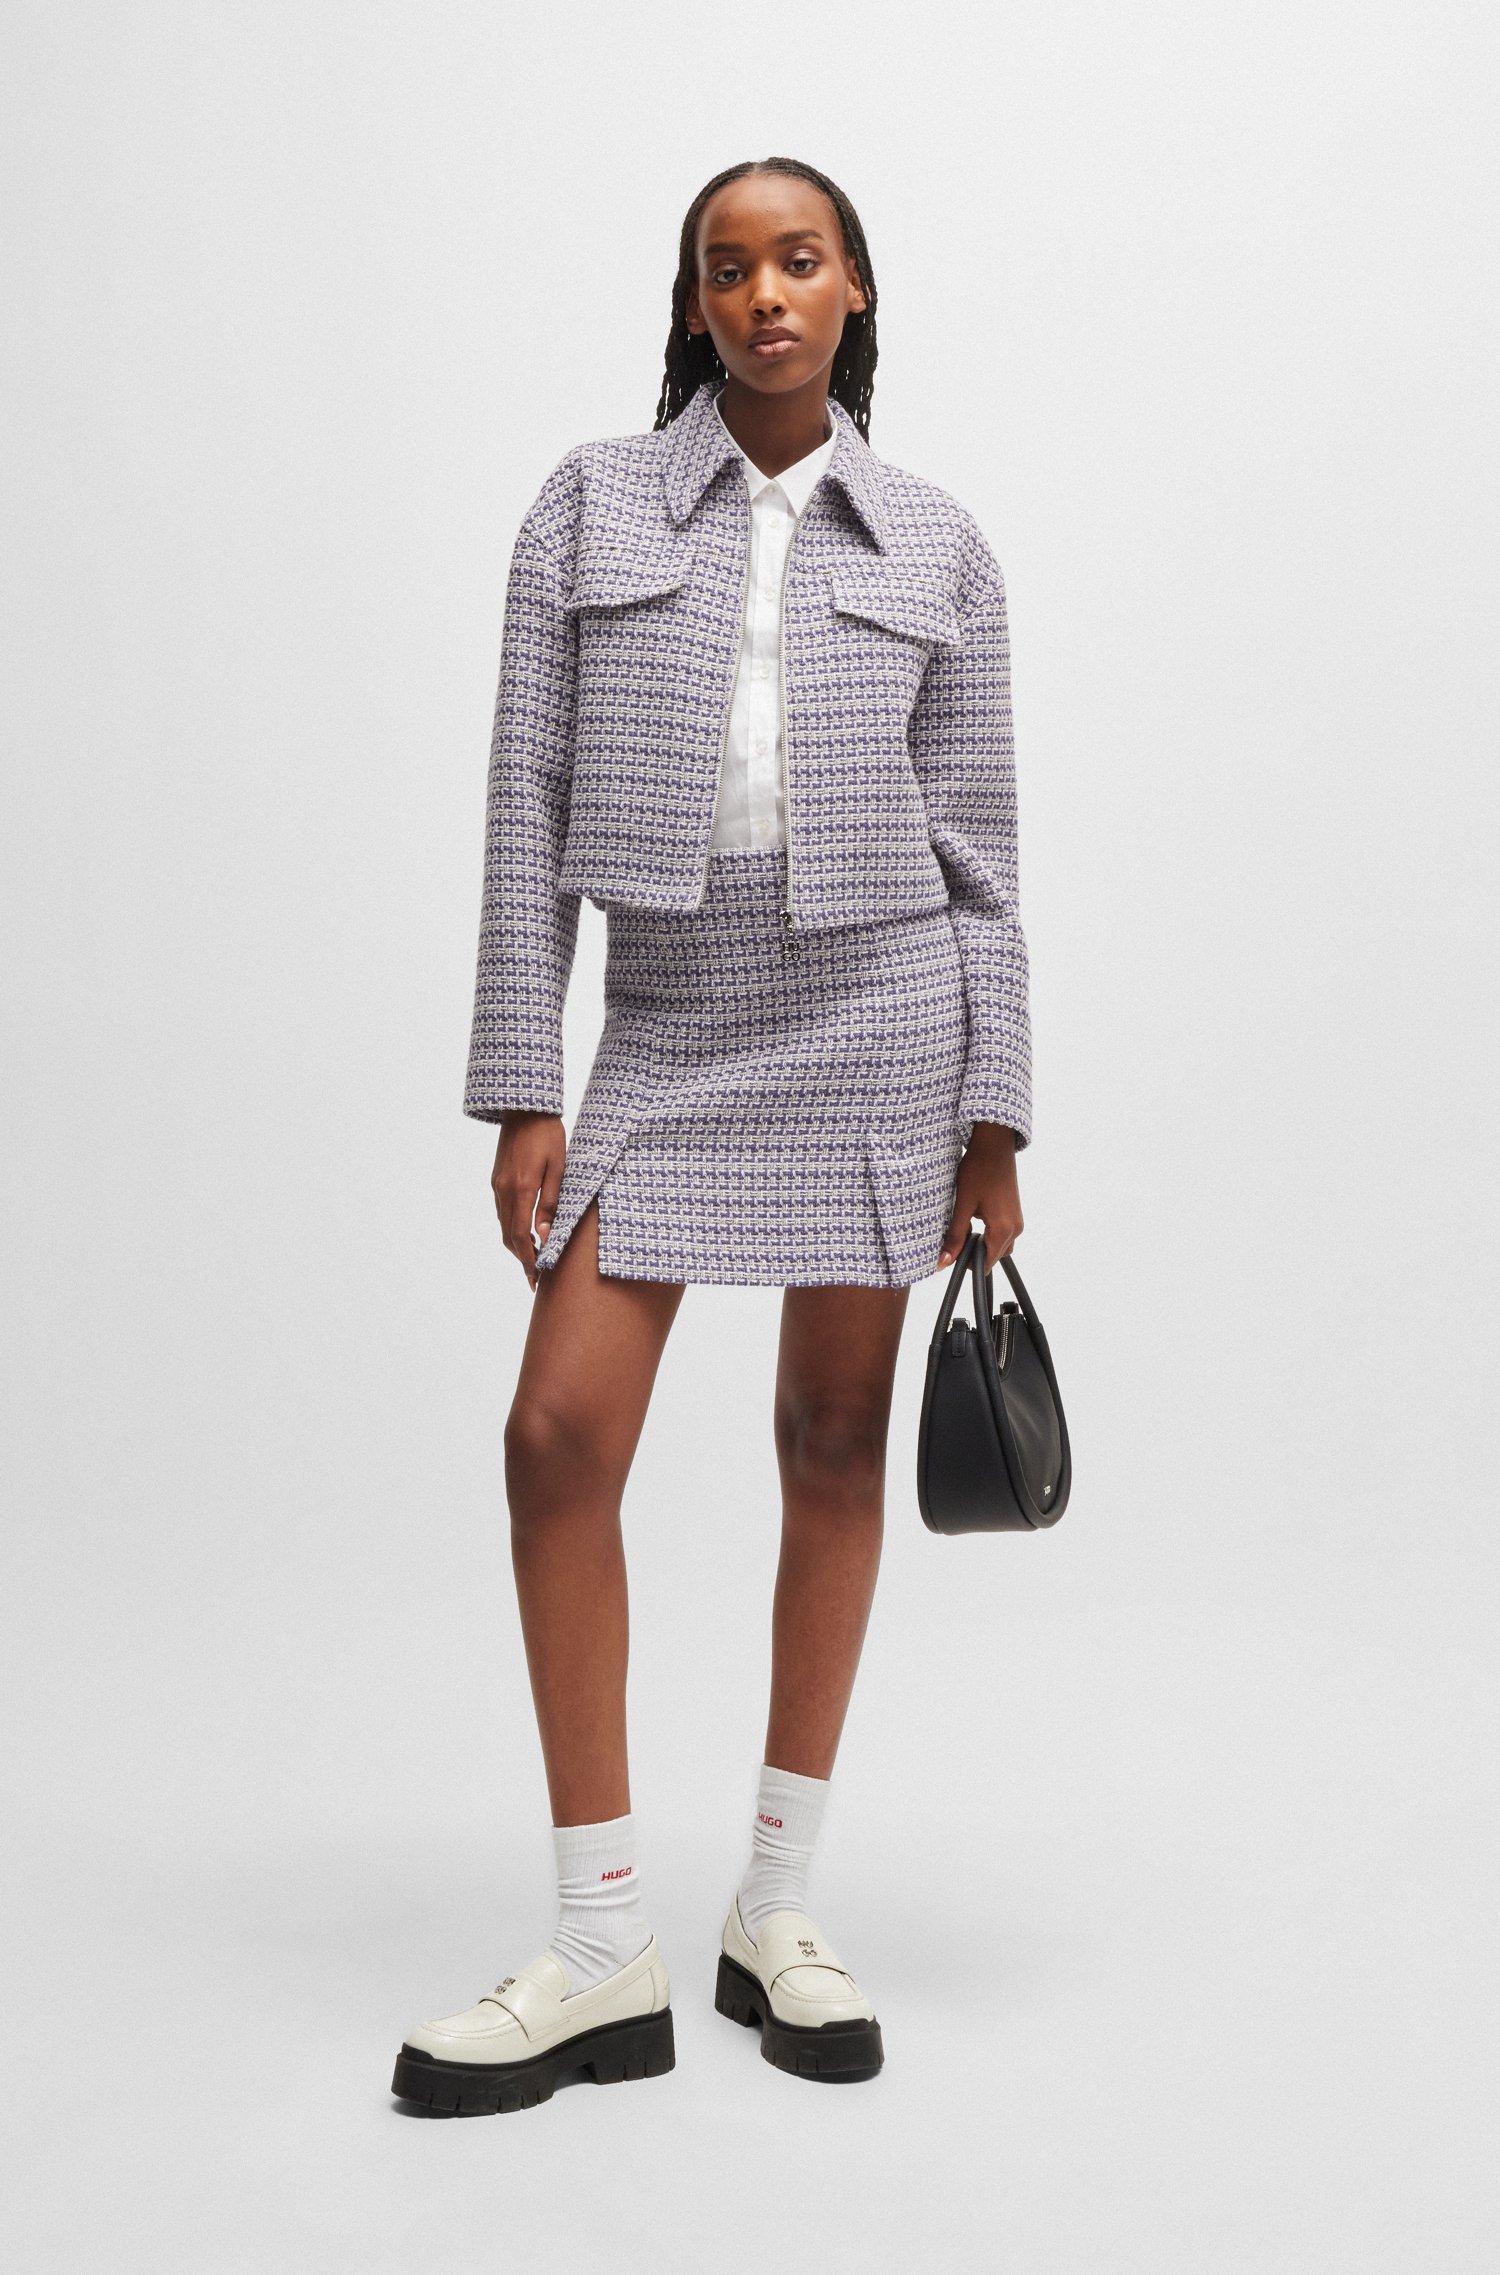 Patterned mini skirt a cotton blend